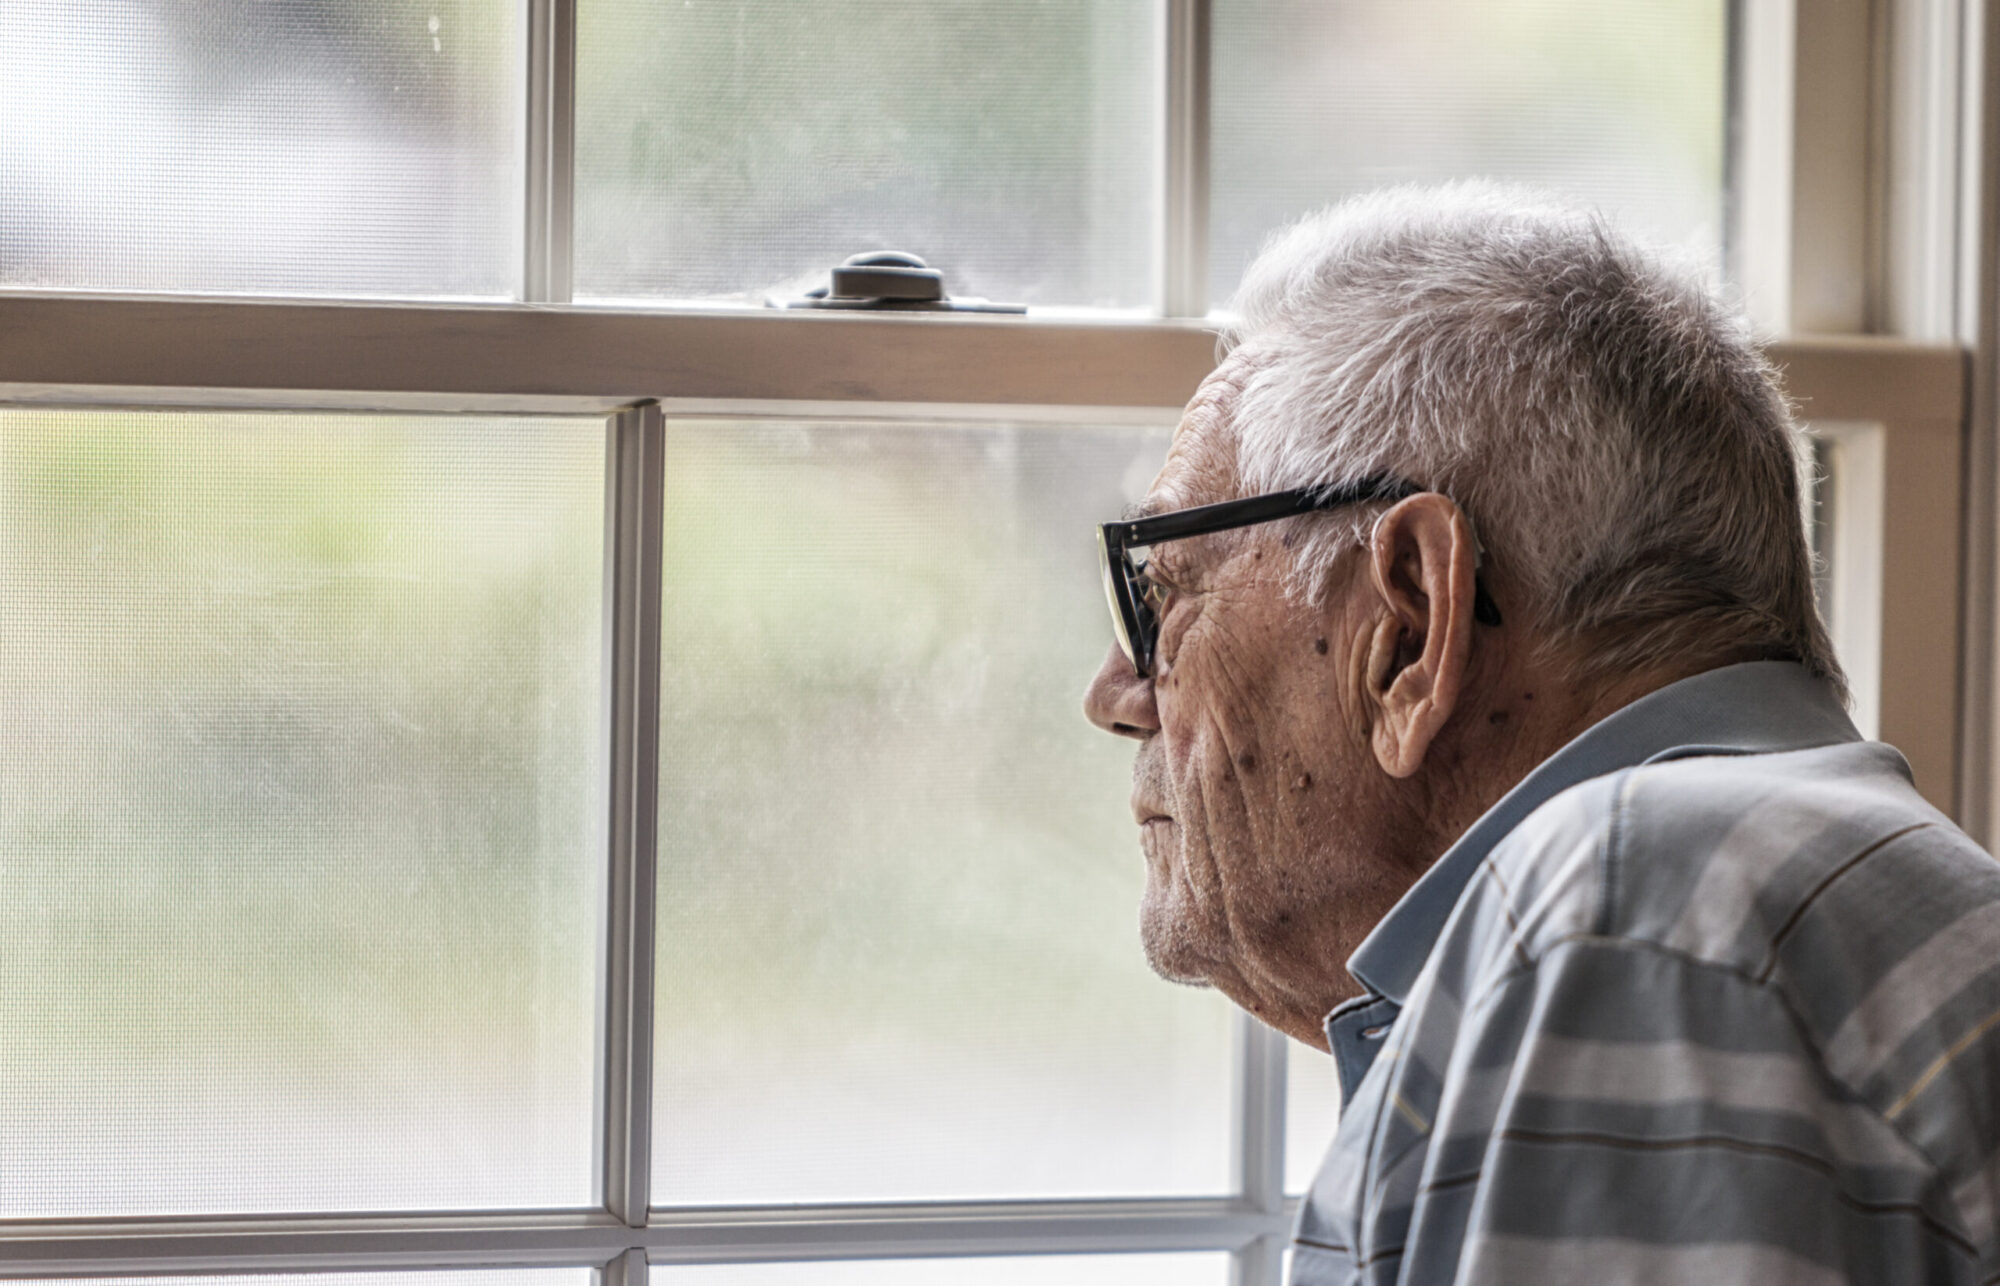 Atrial fibrillation may increase risk for dementia